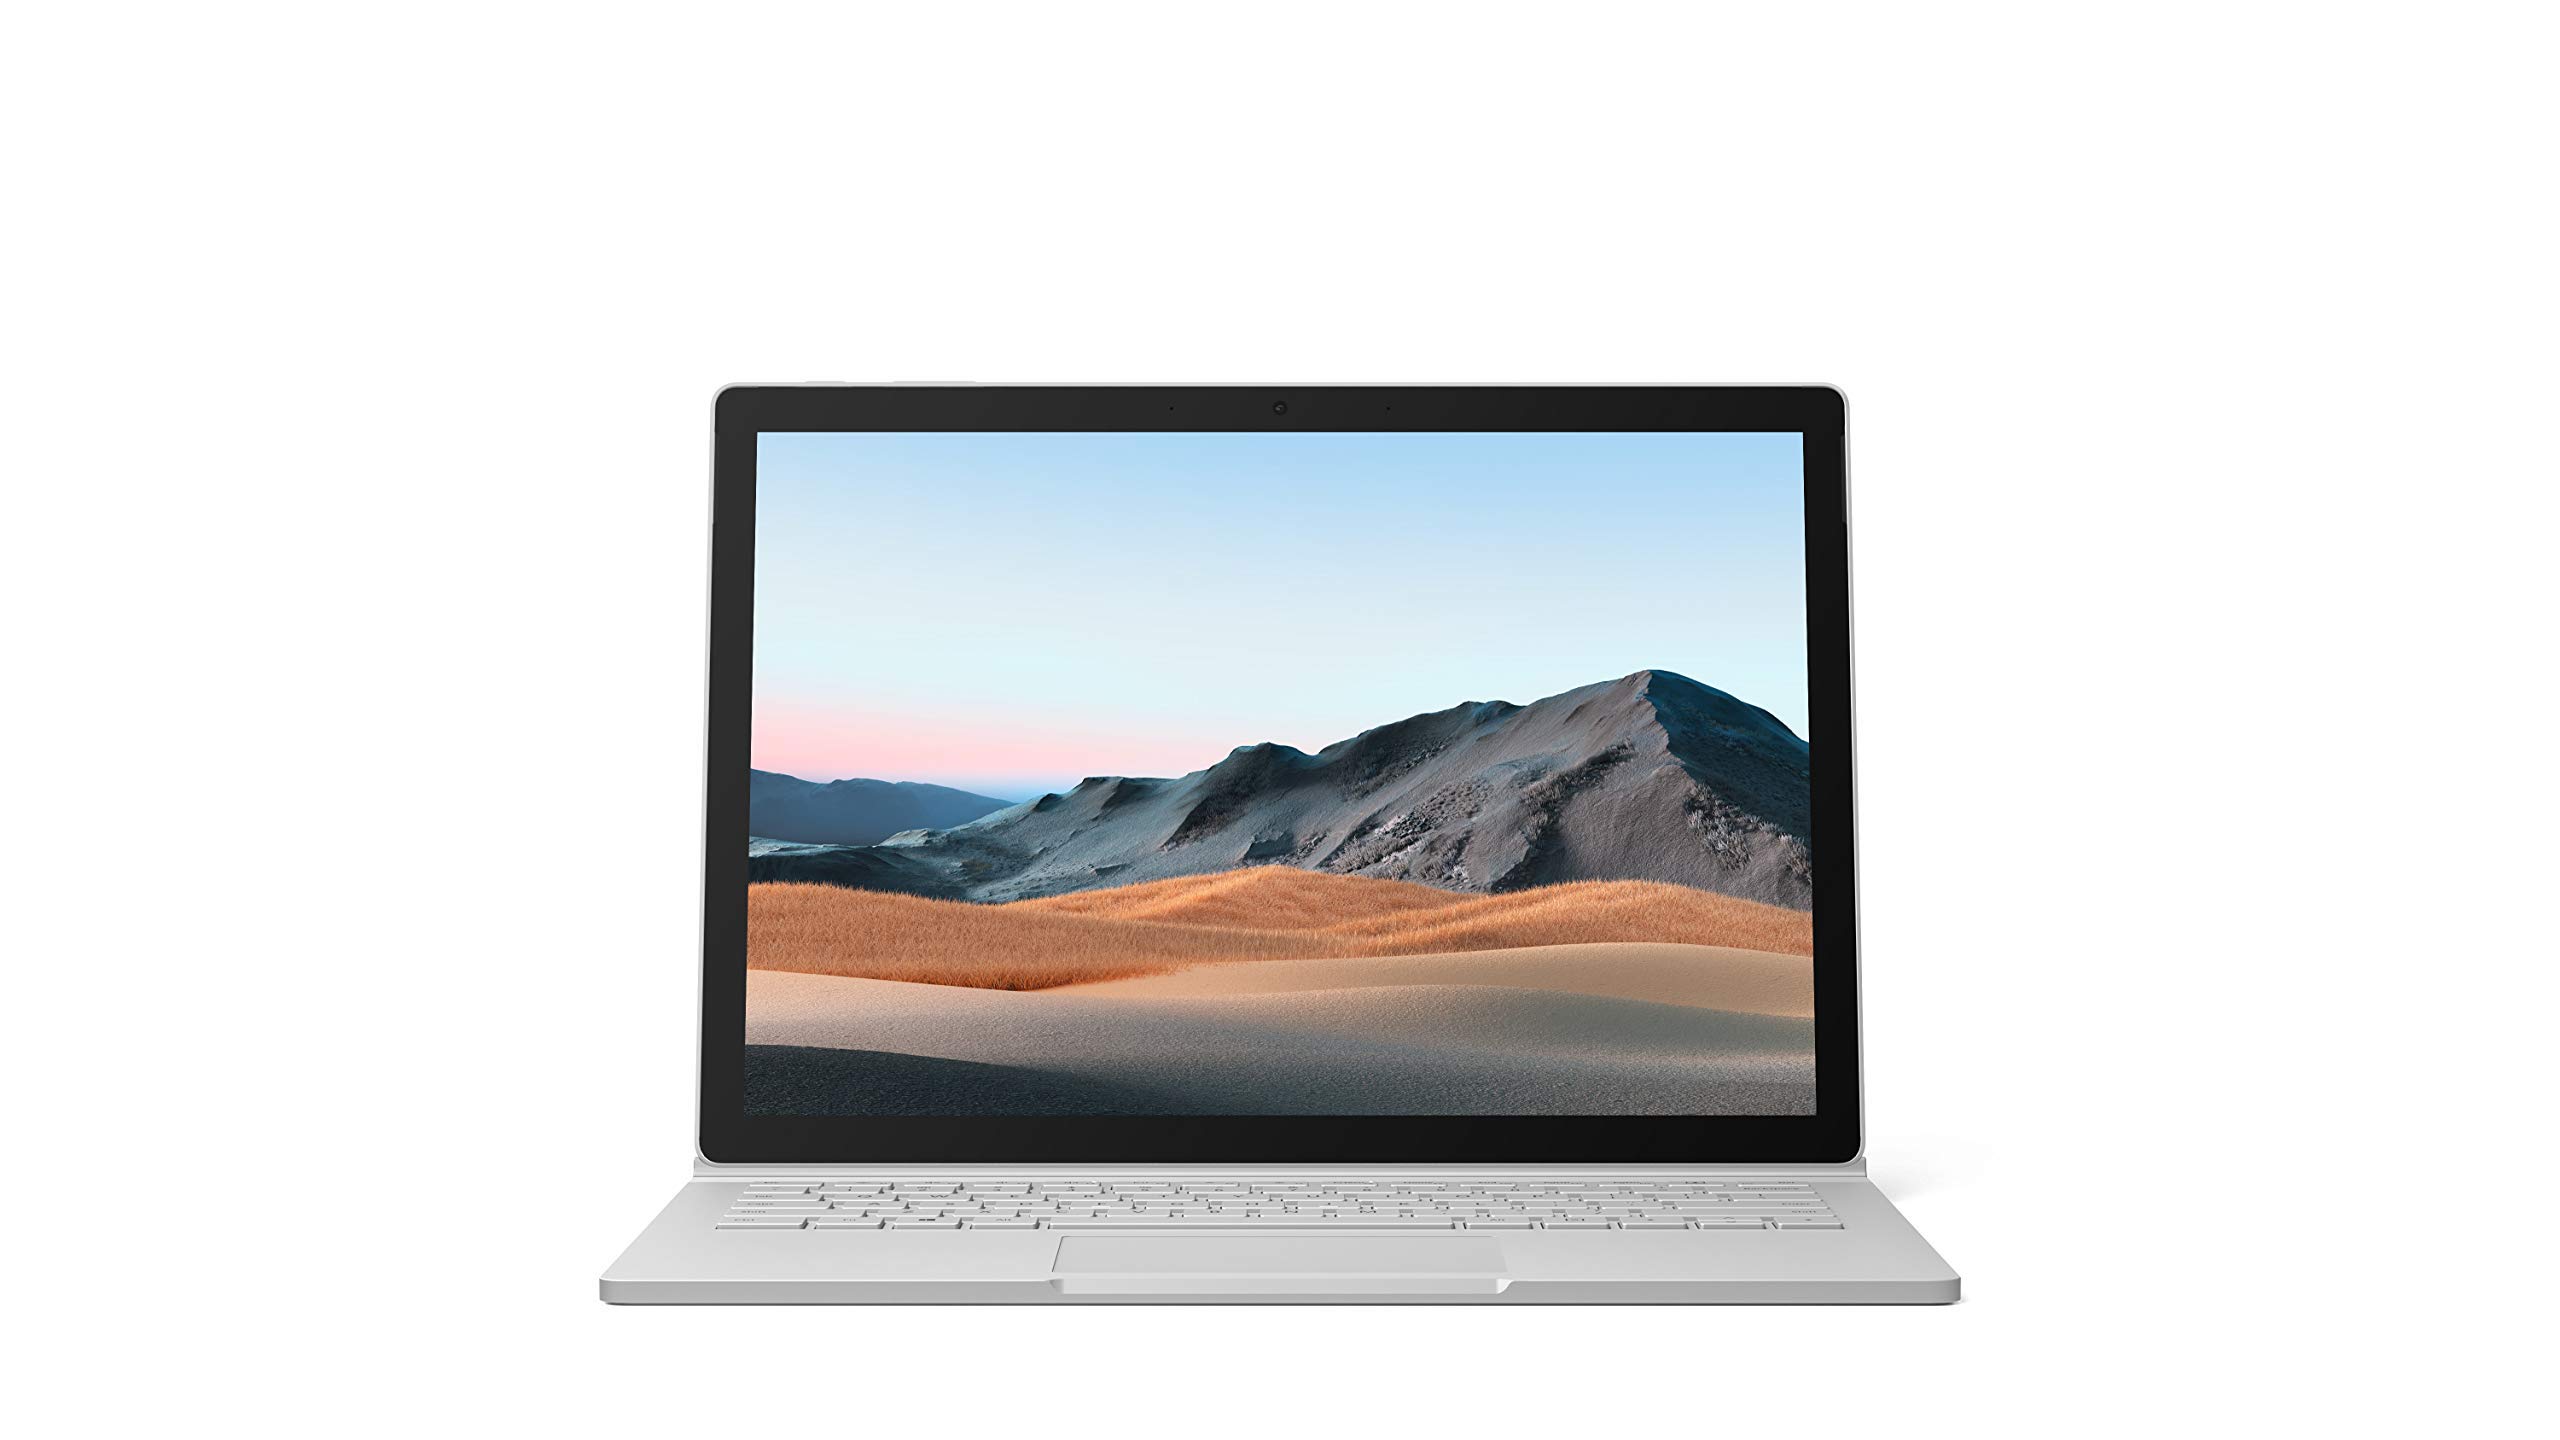 NEW Microsoft Surface Book 3 - 13.5 Touch-Screen - 10th Gen Intel Core i7 - 16GB Memory - 256GB SSD (Latest Model) - Platinum (Renewed)